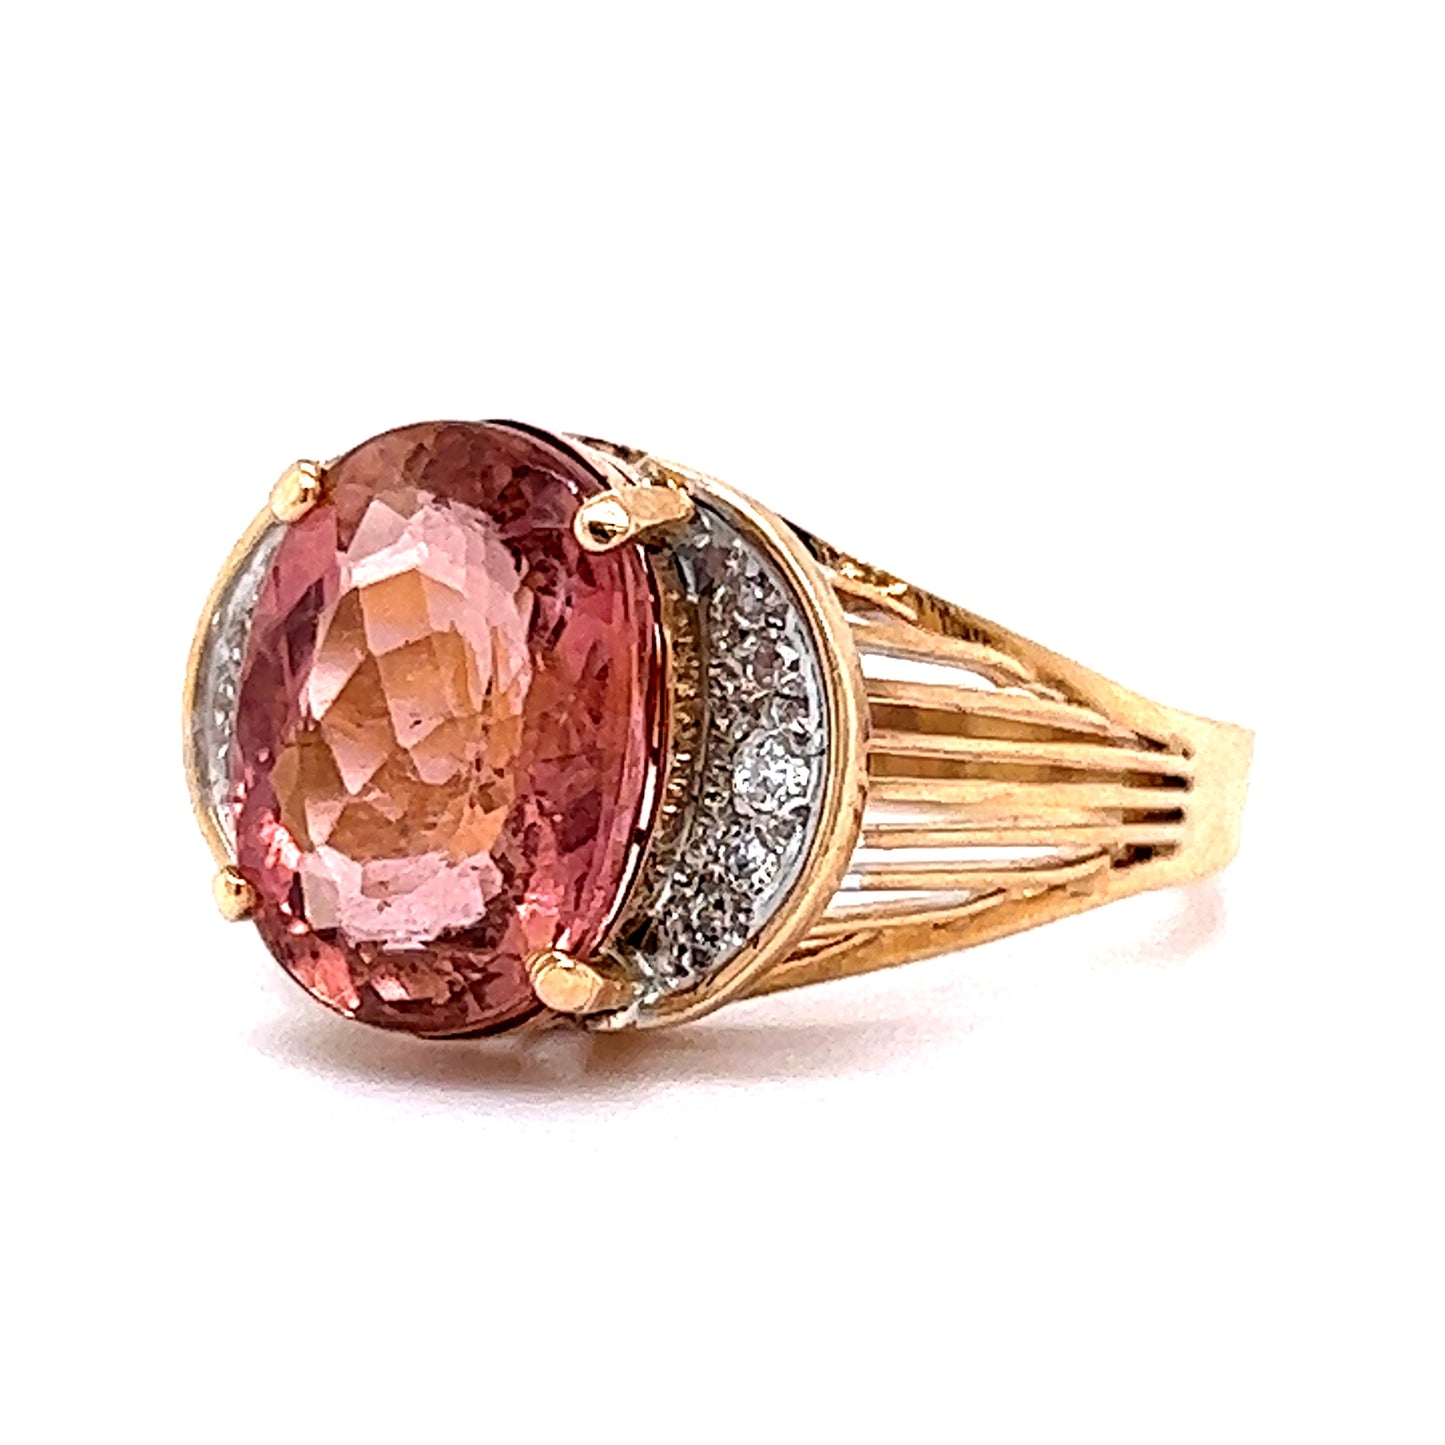 Vintage Pink Tourmaline & Diamond Cocktail Ring in 14k Yellow Gold